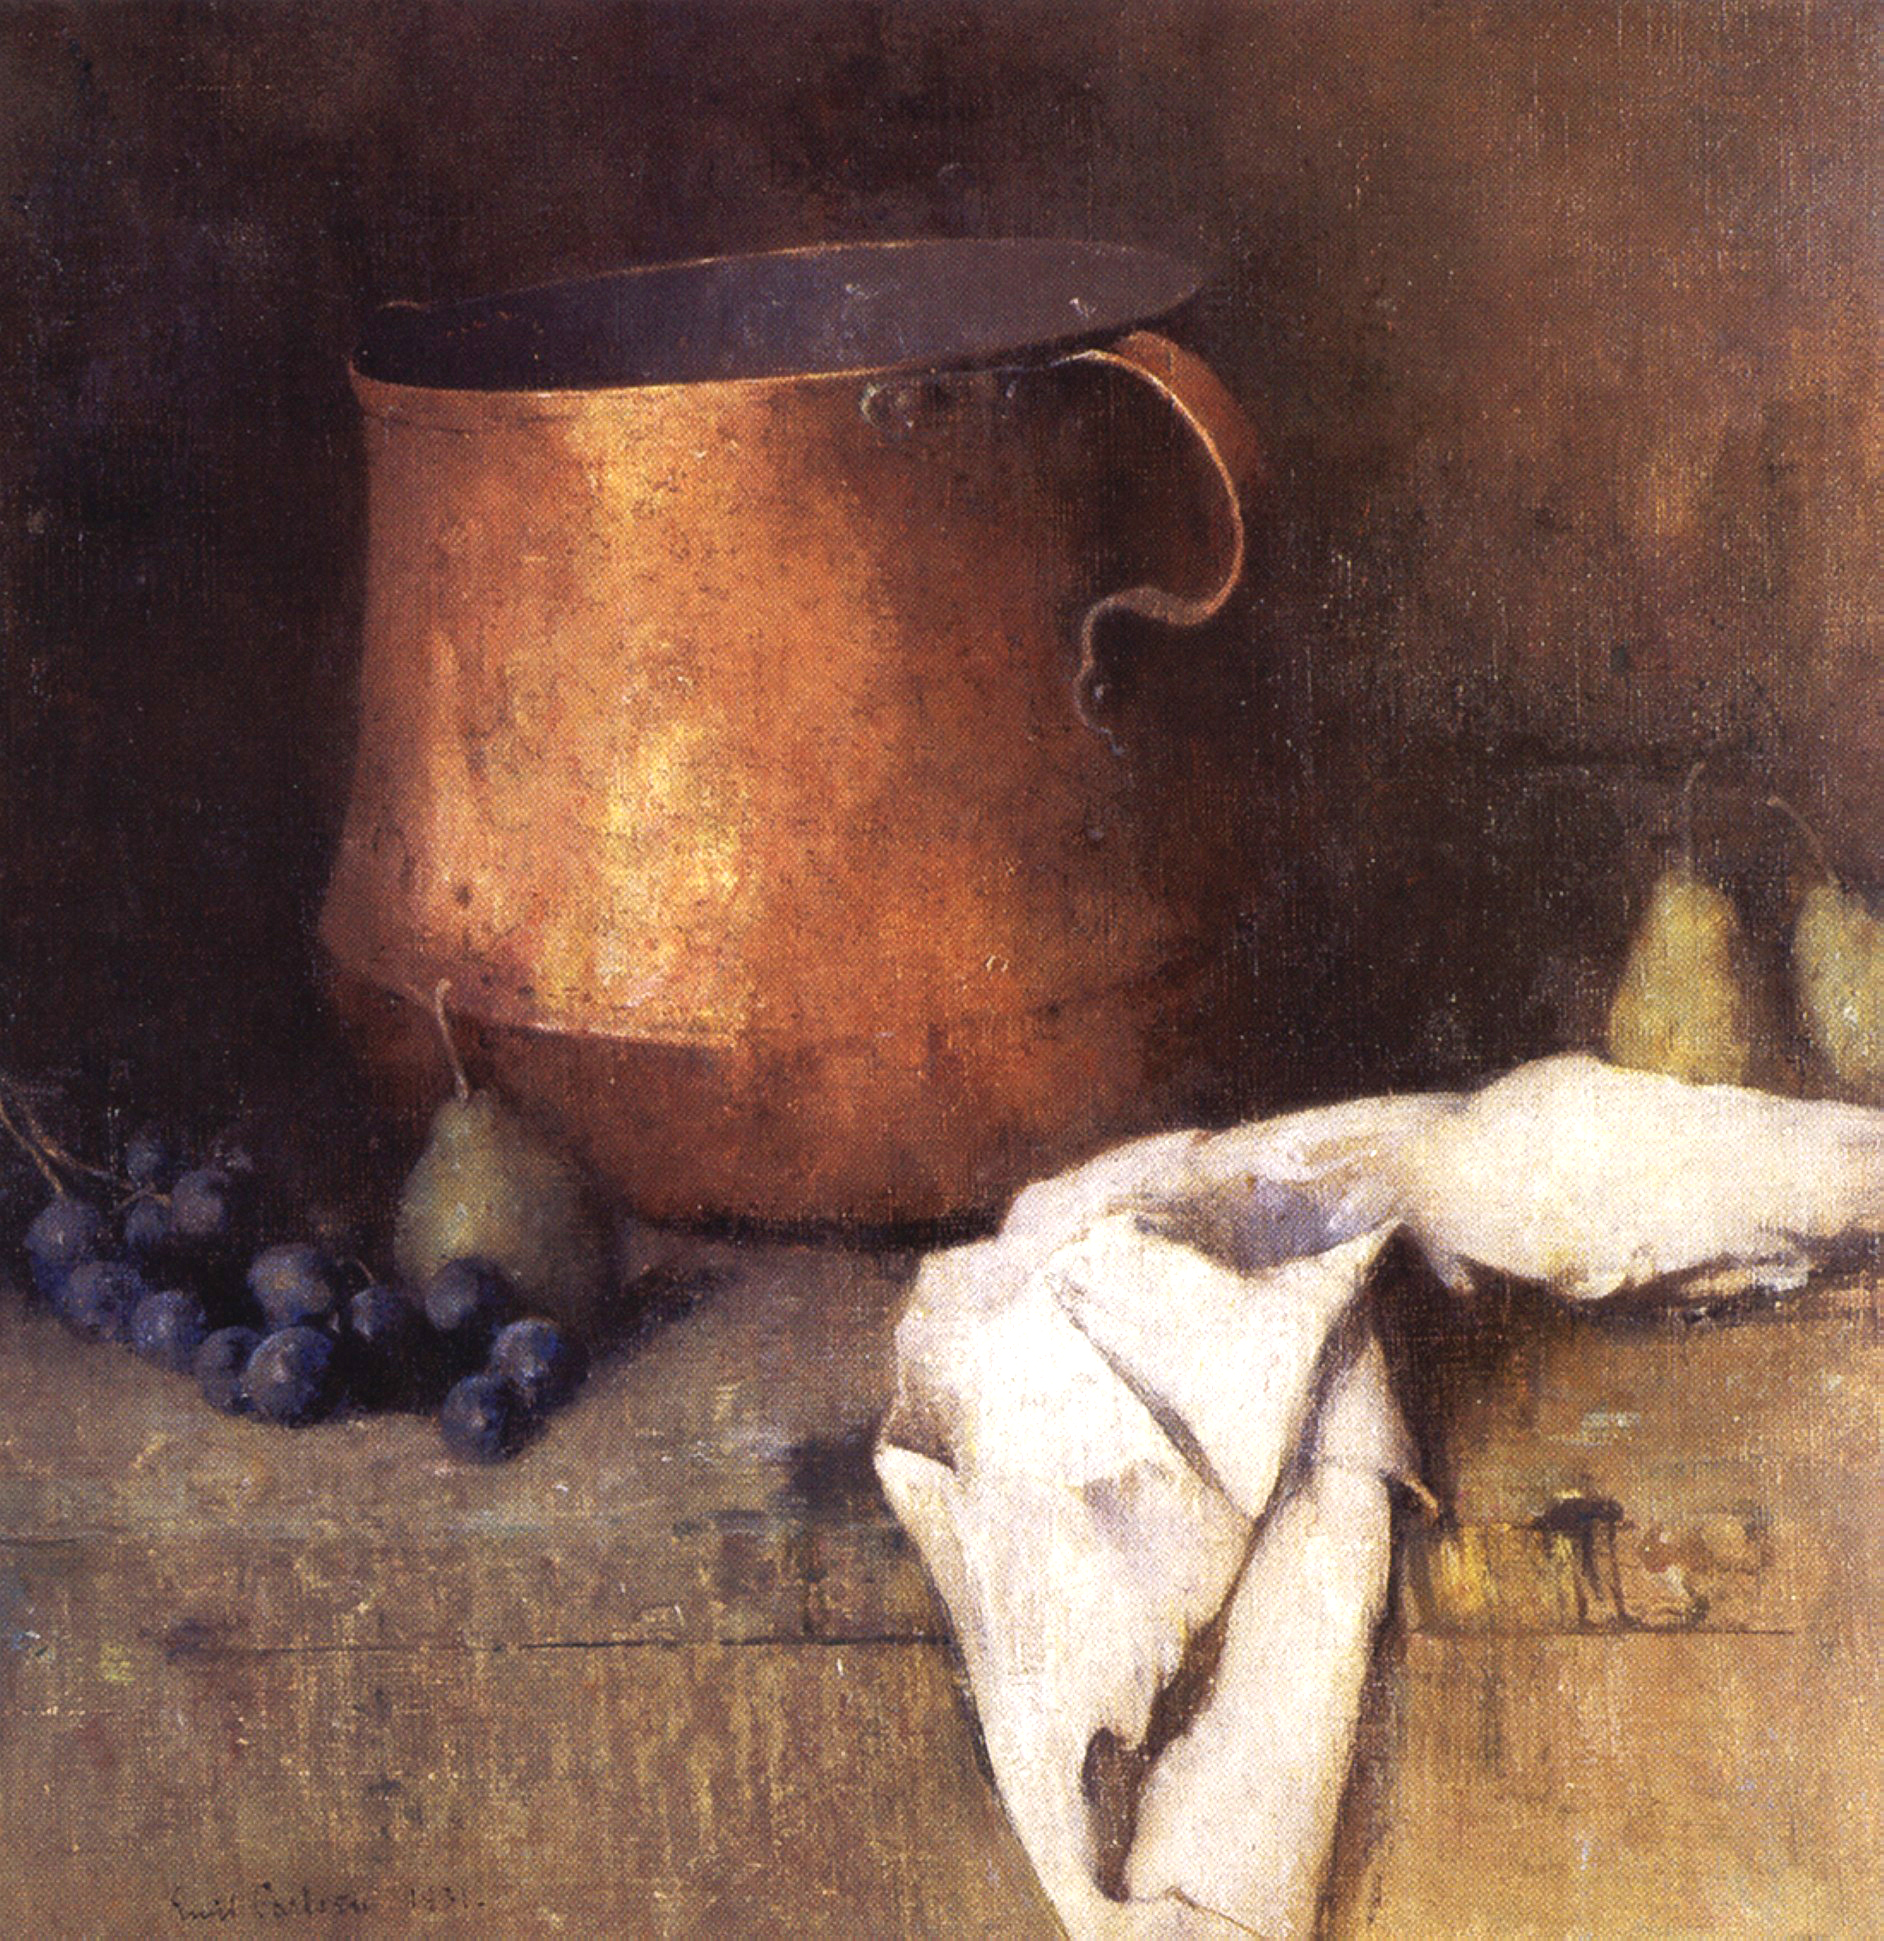 Emil Carlsen The Copper Pot, 1931